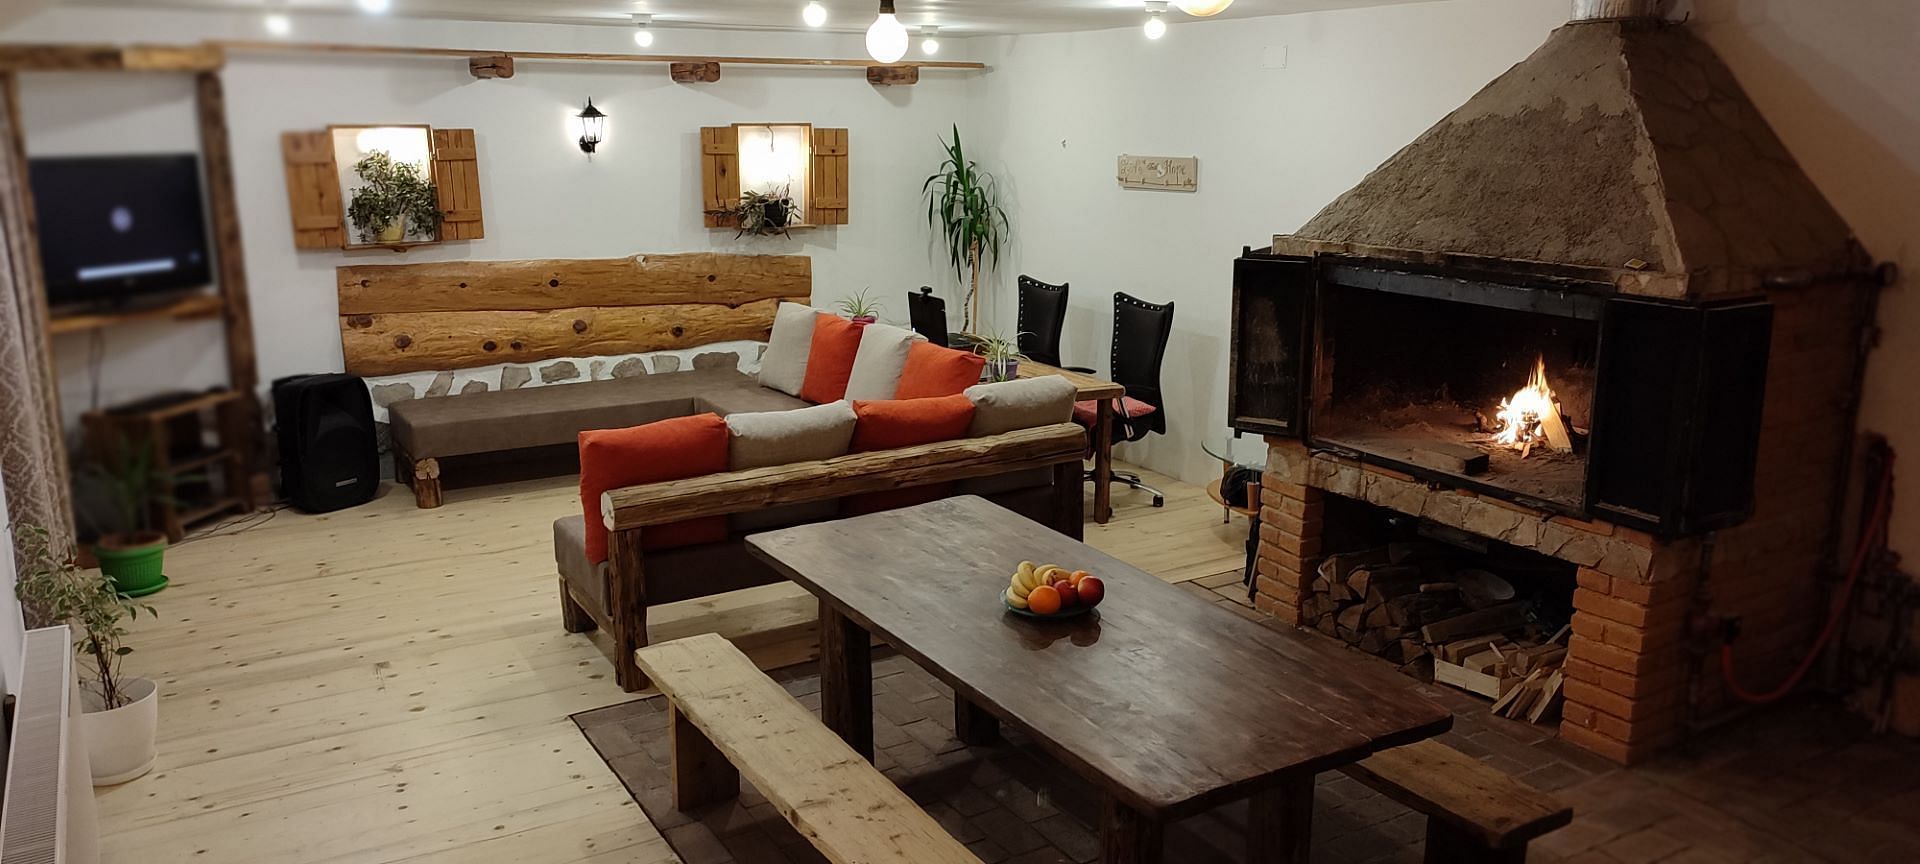 JWguest Apartment at Banja Luka, Republika Srpska | Rustic apartment and lounge for socializing | Jwbnb no brobnb 5